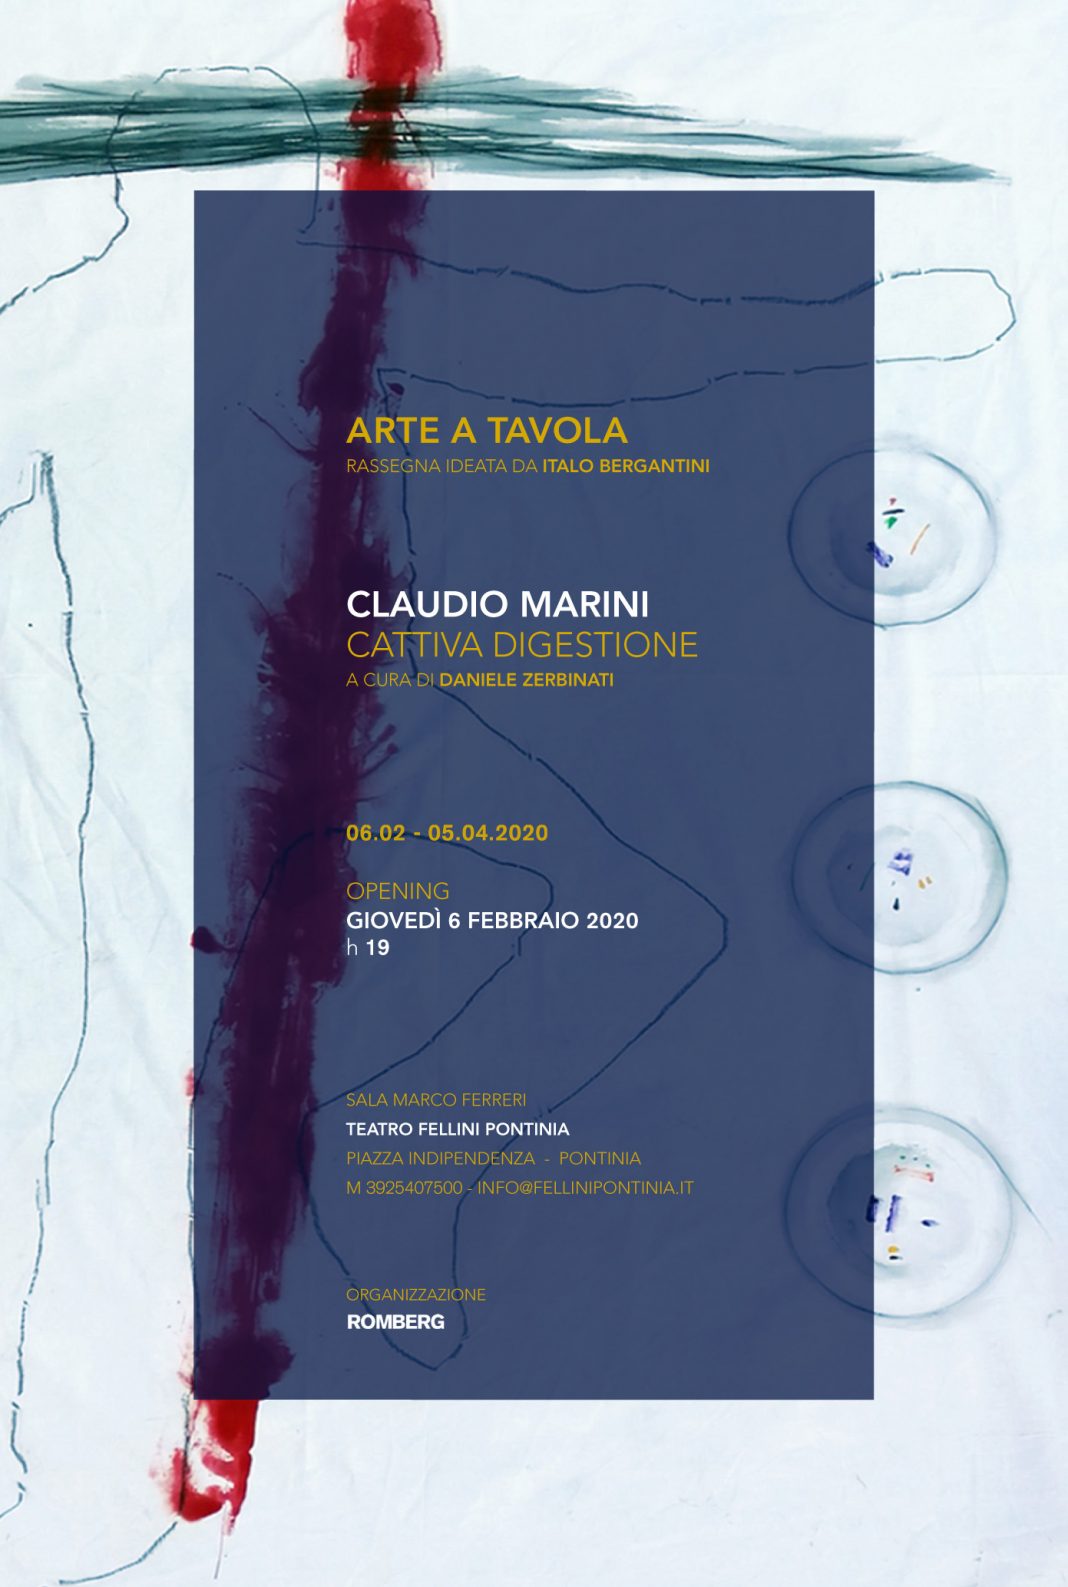 Claudio Marini – Cattiva digestionehttps://www.exibart.com/repository/media/formidable/11/Marini_Invito-Teatro-hd-1068x1587.jpg